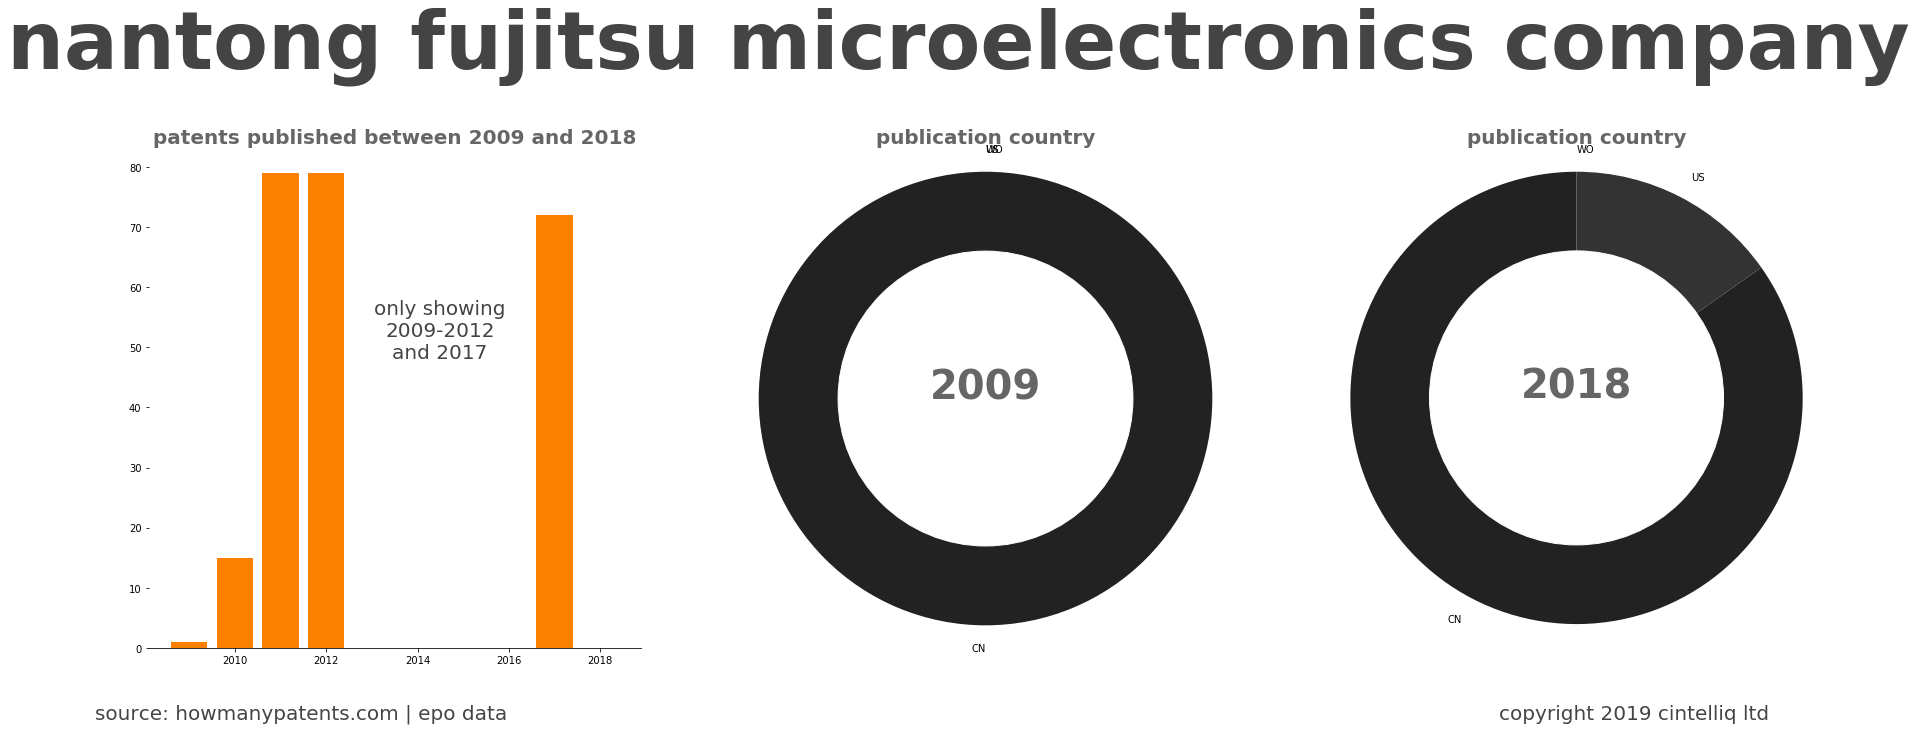 summary of patents for Nantong Fujitsu Microelectronics Company